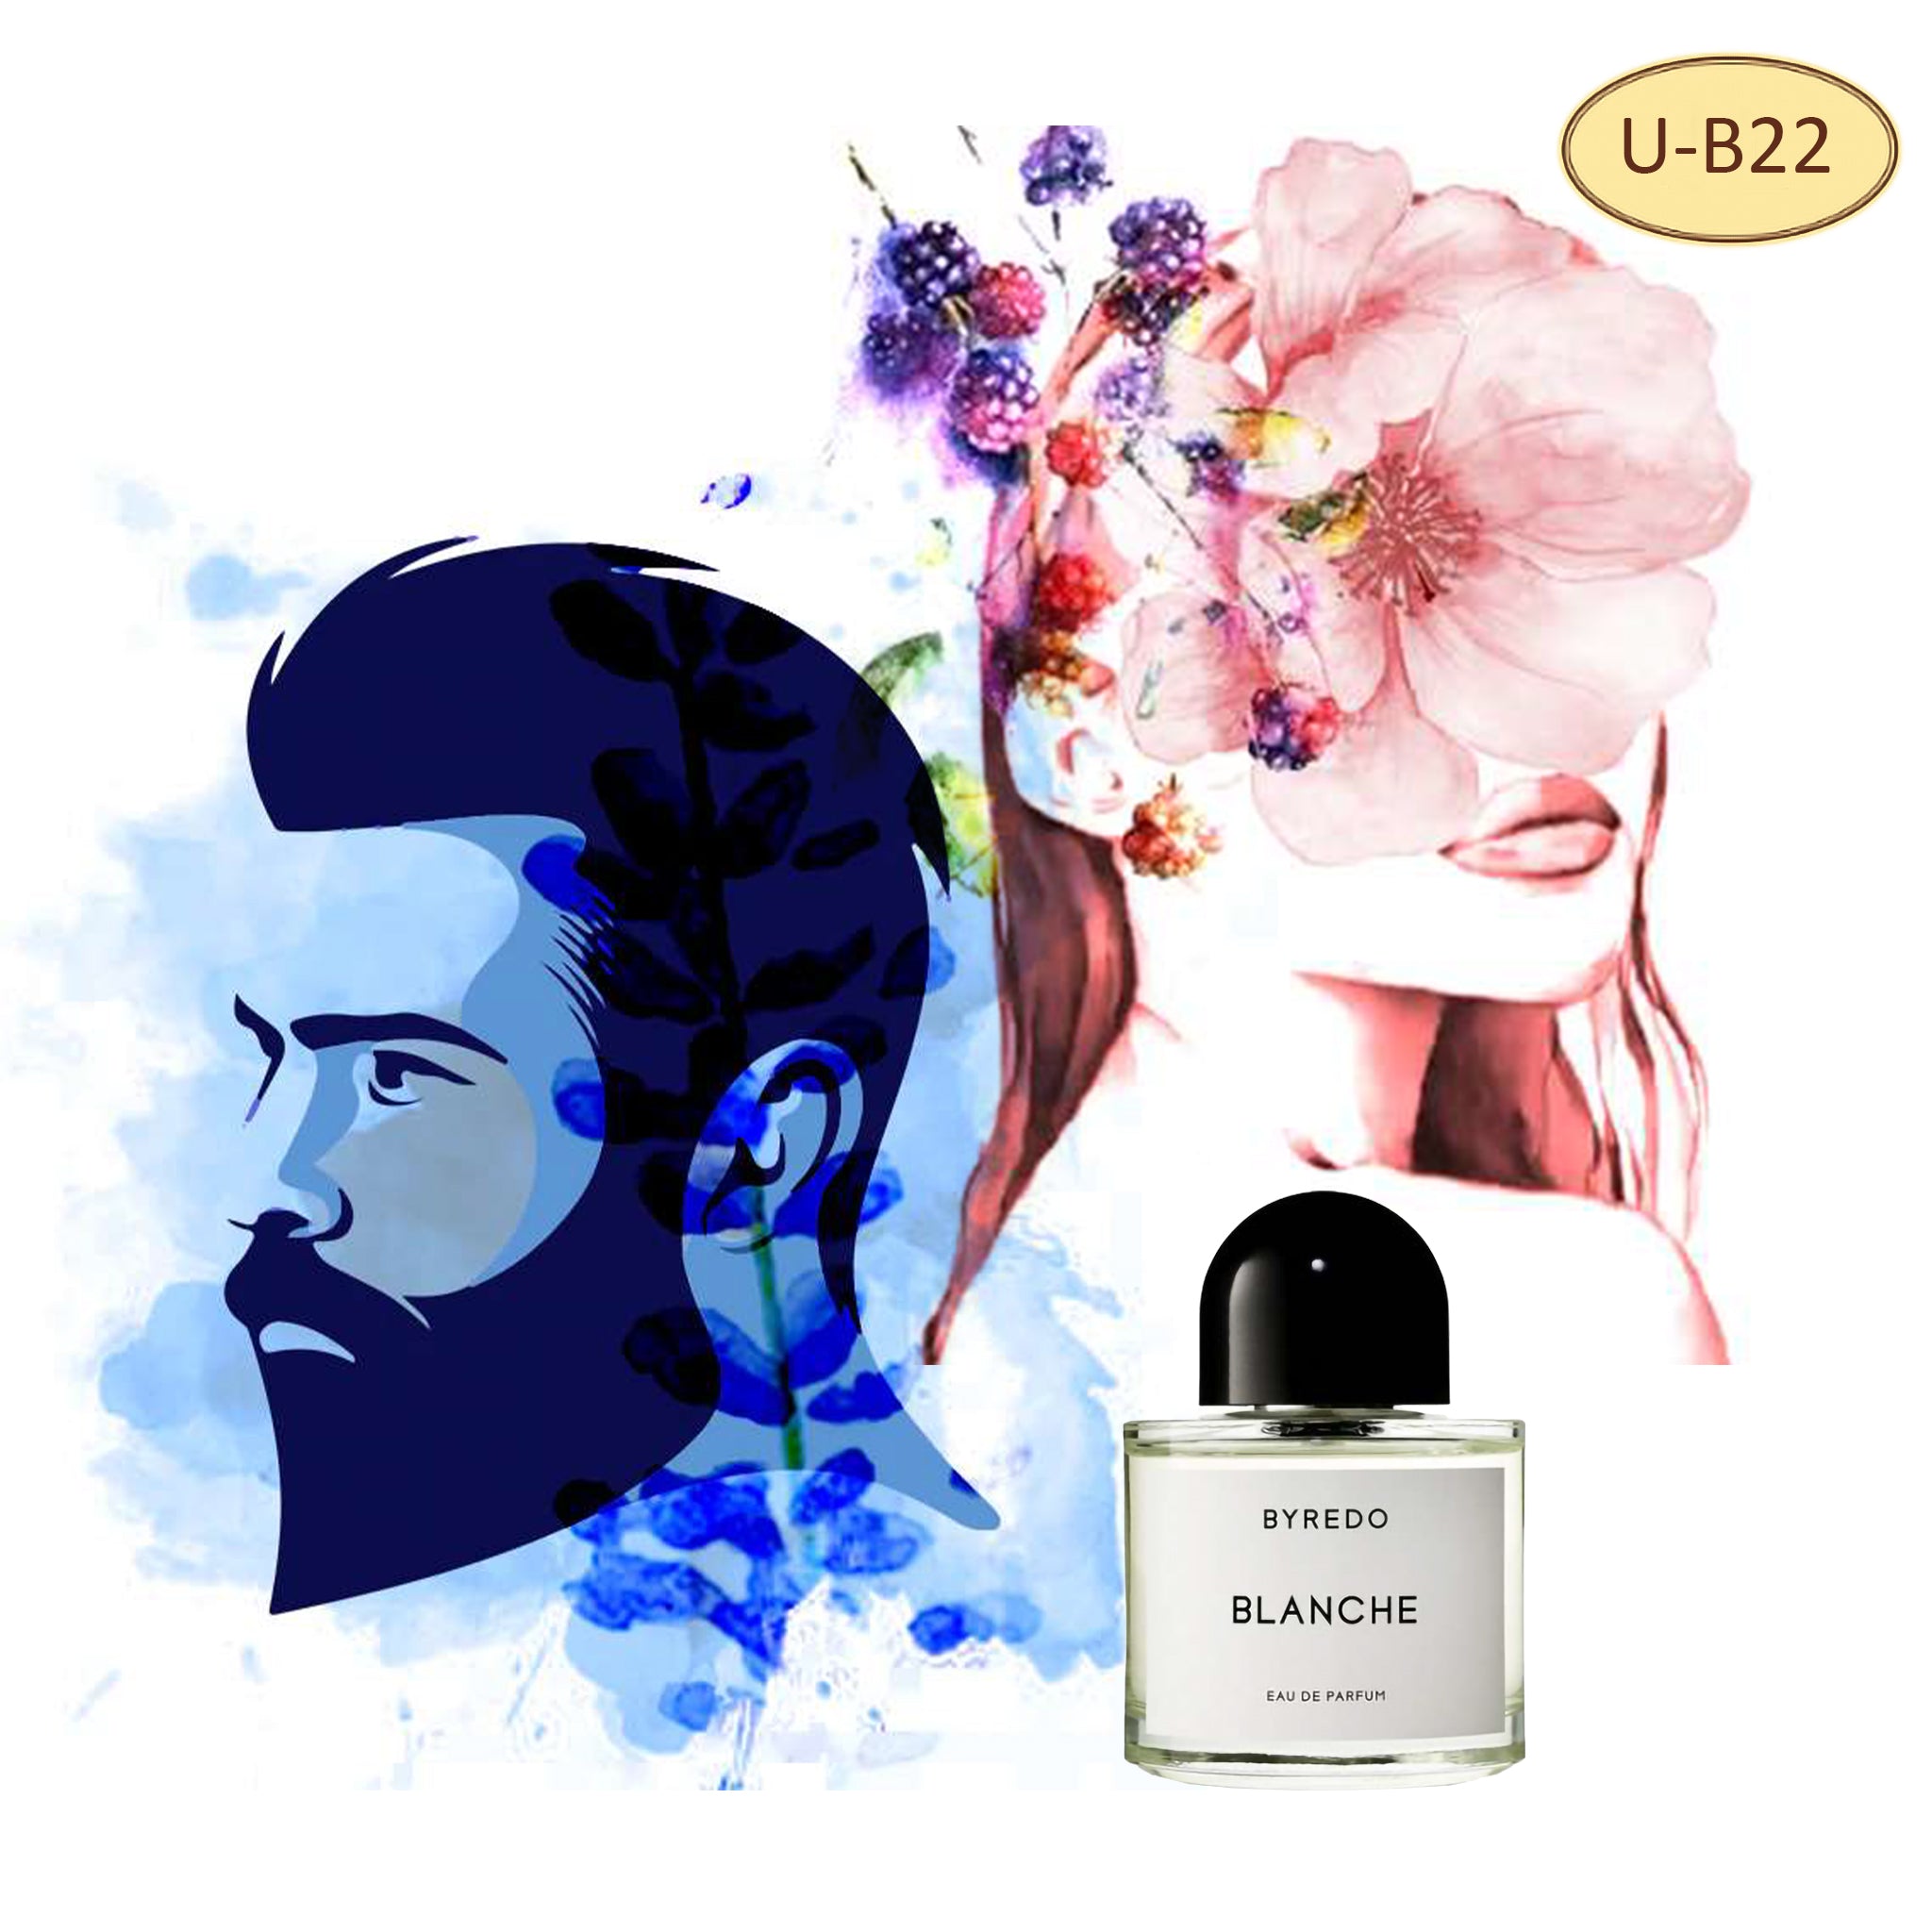 Designer perfumes & fragrances ⋅ Maison Francis Kurkdjian